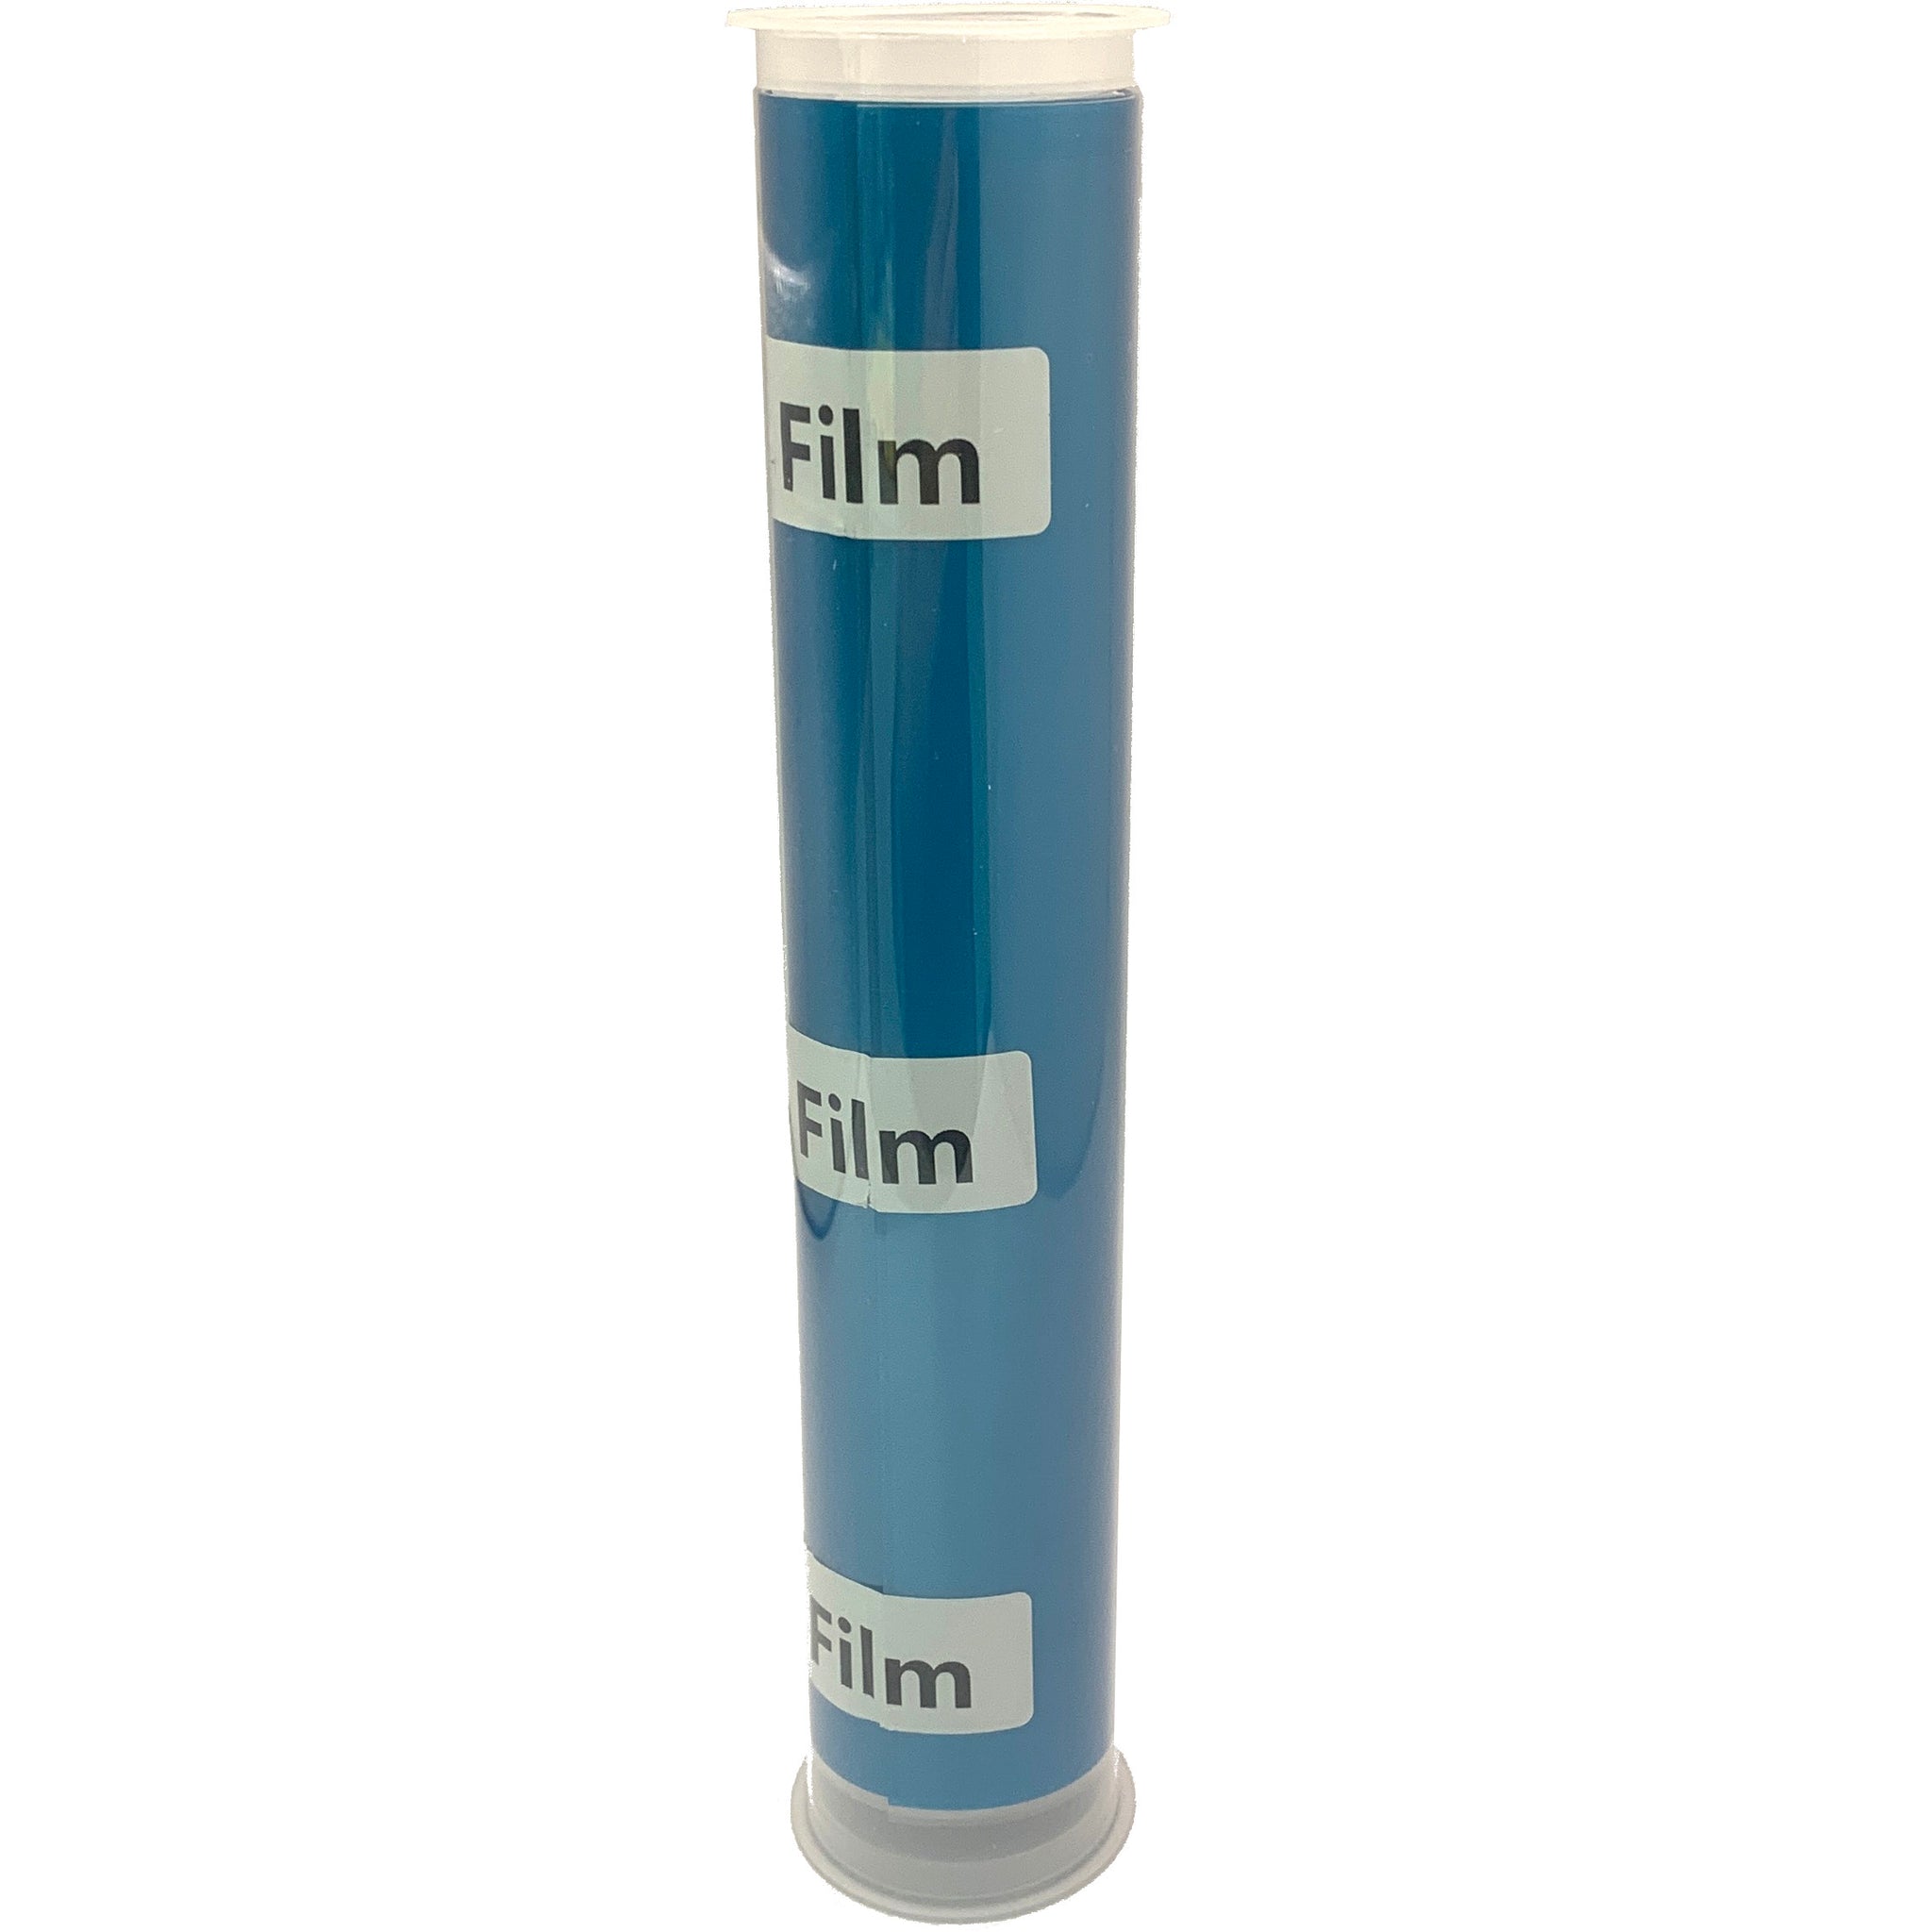 EPAX eSLIP Composite Film, ONE film, Choose your printer size